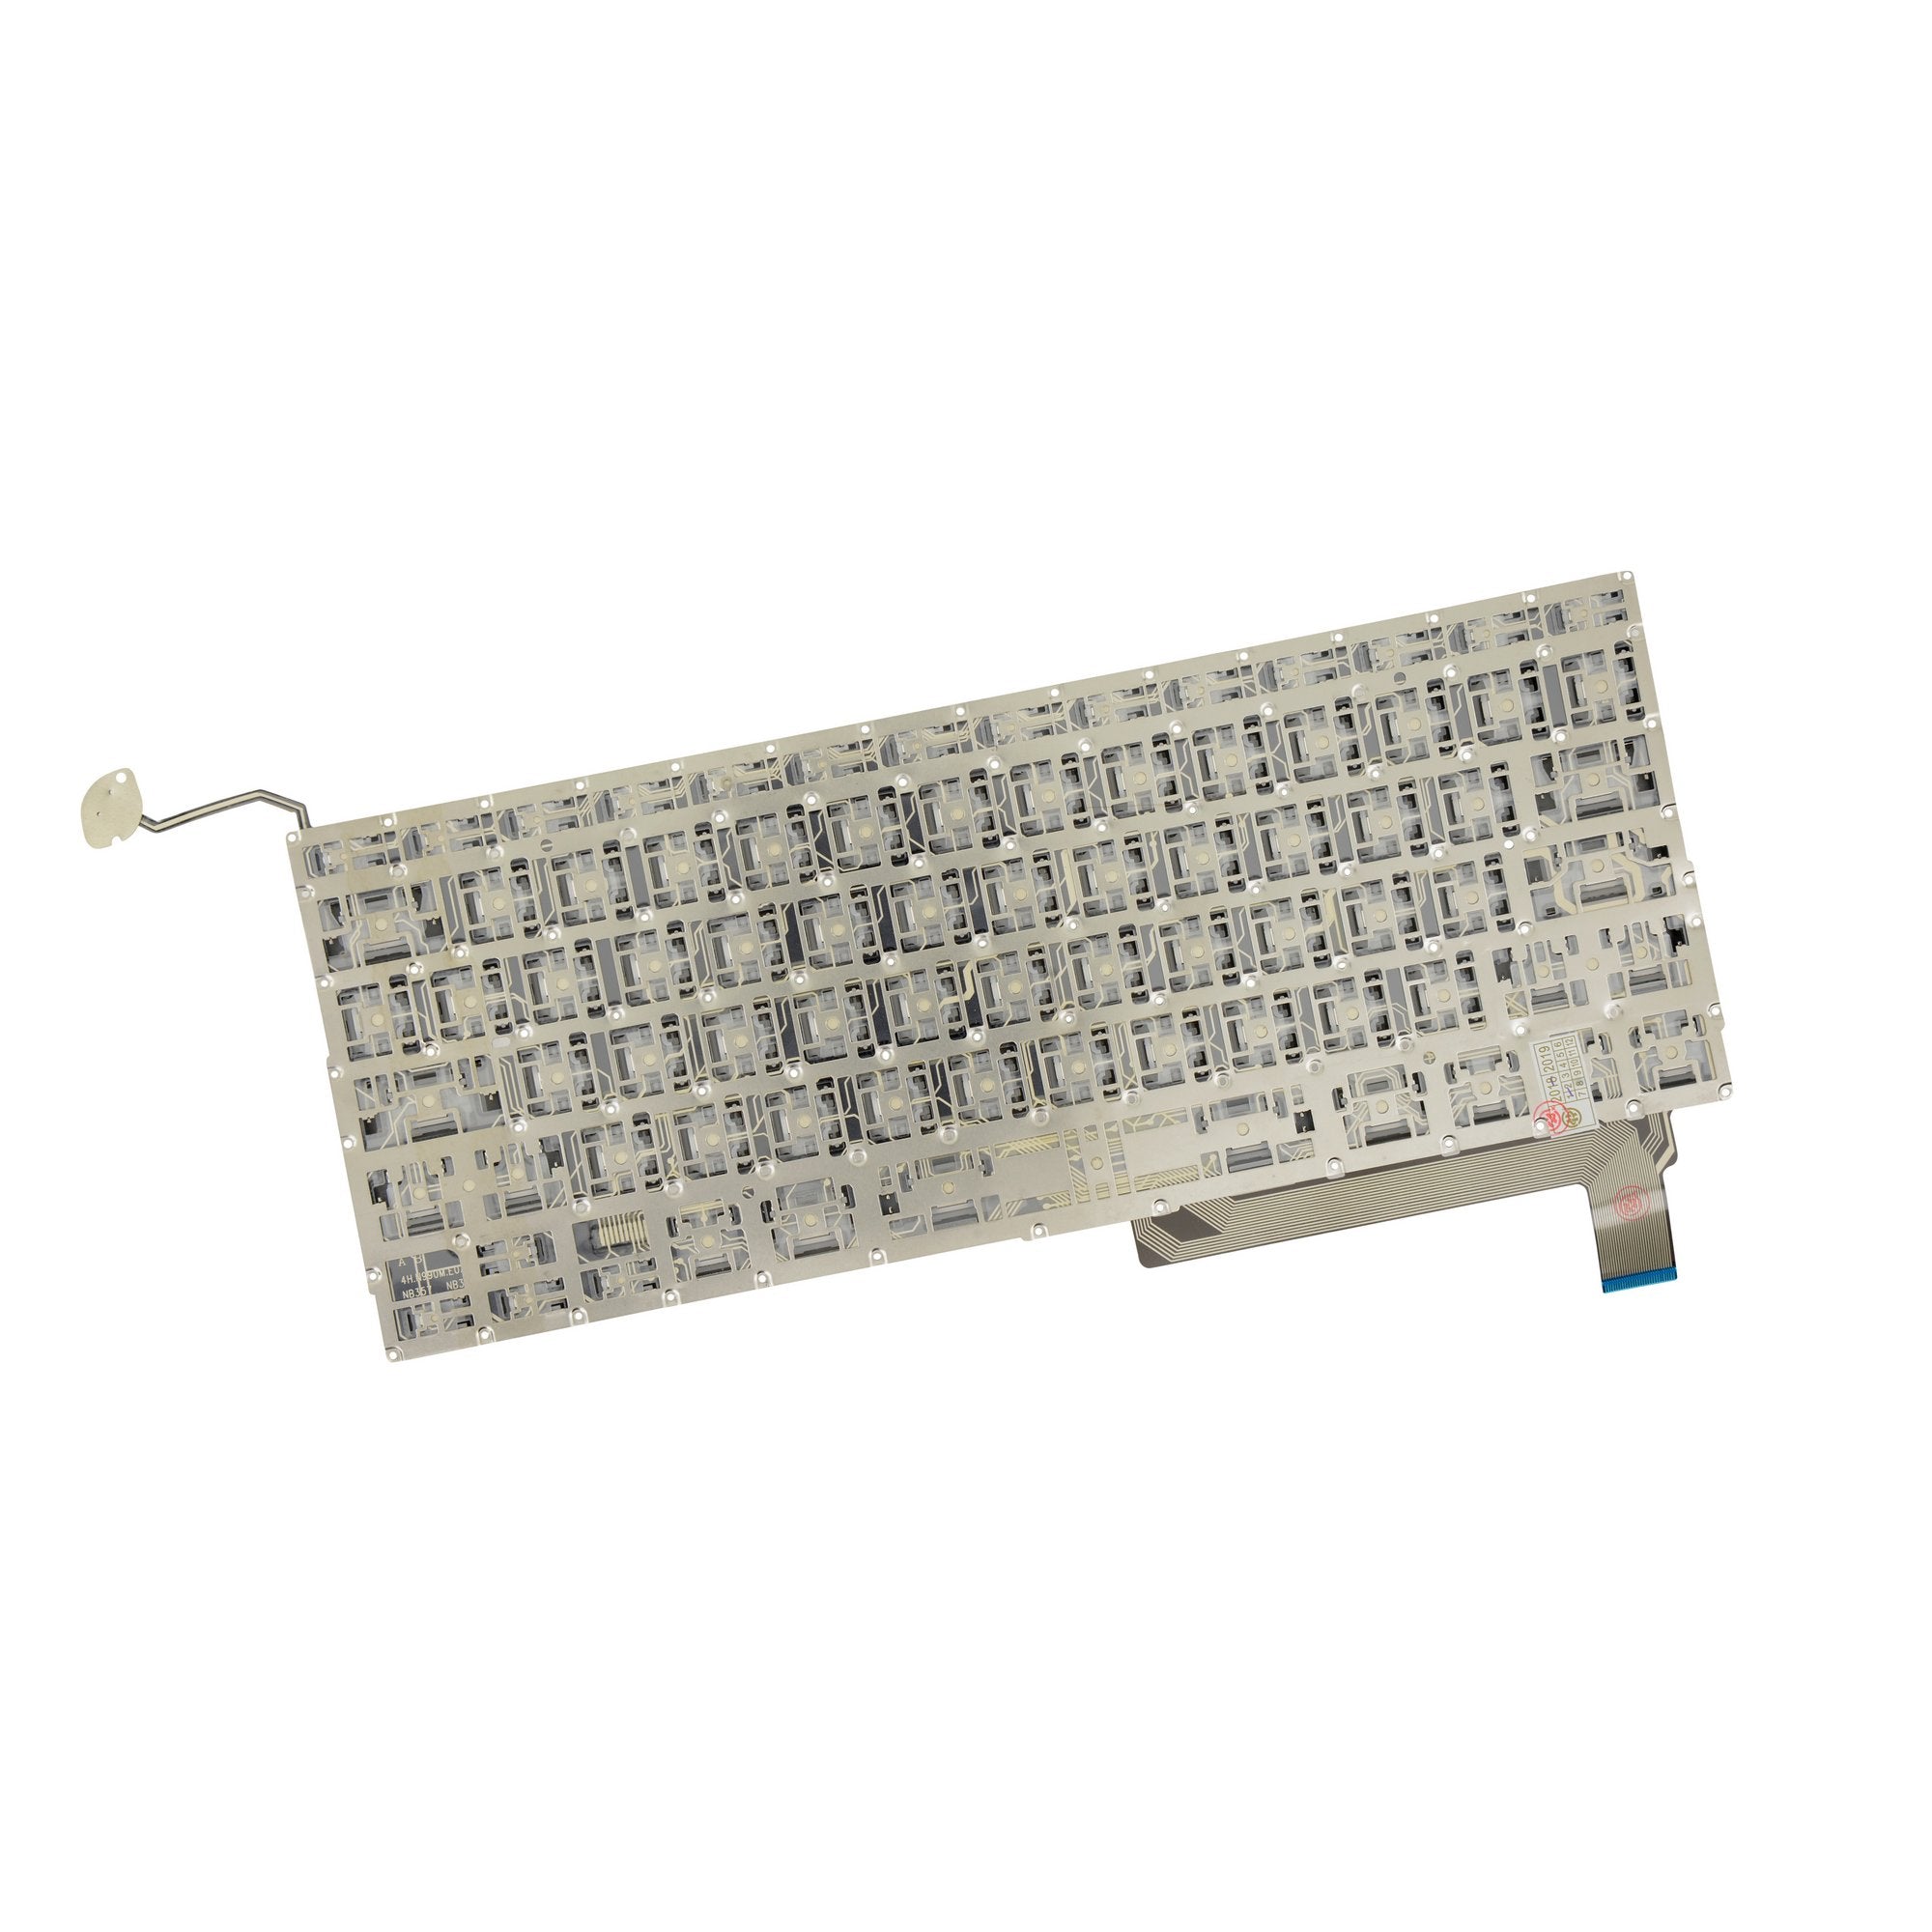 MacBook Pro 15" Unibody (Mid 2009-Mid 2012) Keyboard